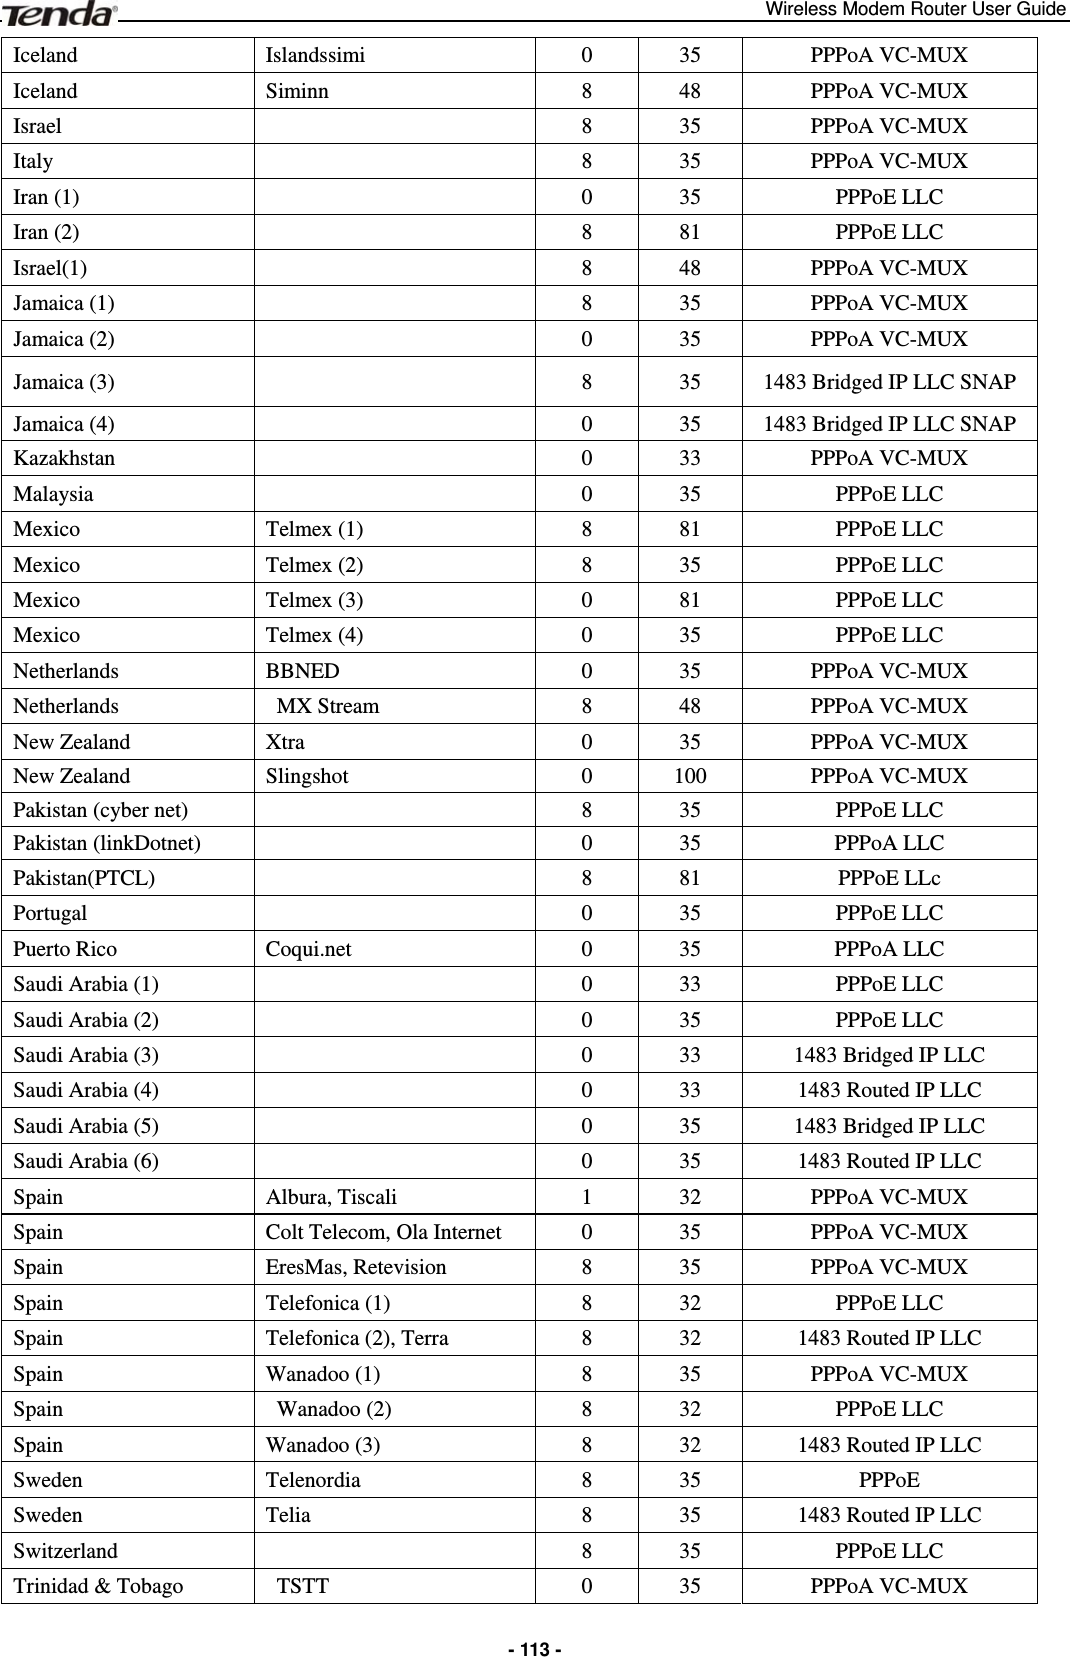 Wireless Modem Router User Guide  - 113 -Iceland  Islandssimi  0  35  PPPoA VC-MUX Iceland  Siminn  8  48  PPPoA VC-MUX Israel    8  35  PPPoA VC-MUX Italy    8  35  PPPoA VC-MUX Iran (1)    0  35  PPPoE LLC Iran (2)    8  81  PPPoE LLC Israel(1)    8  48  PPPoA VC-MUX Jamaica (1)    8  35  PPPoA VC-MUX Jamaica (2)    0  35  PPPoA VC-MUX Jamaica (3)    8  35  1483 Bridged IP LLC SNAP Jamaica (4)    0  35  1483 Bridged IP LLC SNAP Kazakhstan    0  33  PPPoA VC-MUX Malaysia    0  35  PPPoE LLC Mexico  Telmex (1)  8  81  PPPoE LLC Mexico  Telmex (2)  8  35  PPPoE LLC Mexico  Telmex (3)  0  81  PPPoE LLC Mexico  Telmex (4)  0  35  PPPoE LLC Netherlands   BBNED  0  35  PPPoA VC-MUX Netherlands    MX Stream  8  48  PPPoA VC-MUX New Zealand    Xtra  0  35  PPPoA VC-MUX New Zealand    Slingshot  0  100  PPPoA VC-MUX Pakistan (cyber net)    8  35  PPPoE LLC Pakistan (linkDotnet)    0  35  PPPoA LLC Pakistan(PTCL)    8  81  PPPoE LLc Portugal    0  35  PPPoE LLC Puerto Rico    Coqui.net  0  35  PPPoA LLC Saudi Arabia (1)    0  33  PPPoE LLC Saudi Arabia (2)    0  35  PPPoE LLC Saudi Arabia (3)    0  33  1483 Bridged IP LLC Saudi Arabia (4)    0  33  1483 Routed IP LLC Saudi Arabia (5)    0  35  1483 Bridged IP LLC Saudi Arabia (6)    0  35  1483 Routed IP LLC Spain  Albura, Tiscali  1  32  PPPoA VC-MUX Spain   Colt Telecom, Ola Internet  0  35  PPPoA VC-MUX Spain   EresMas, Retevision  8  35  PPPoA VC-MUX Spain   Telefonica (1)  8  32  PPPoE LLC Spain   Telefonica (2), Terra  8  32  1483 Routed IP LLC Spain   Wanadoo (1)  8  35  PPPoA VC-MUX Spain    Wanadoo (2)  8  32  PPPoE LLC Spain   Wanadoo (3)  8  32  1483 Routed IP LLC Sweden   Telenordia  8  35  PPPoE Sweden   Telia  8  35  1483 Routed IP LLC Switzerland    8  35  PPPoE LLC Trinidad &amp; Tobago     TSTT  0  35  PPPoA VC-MUX 